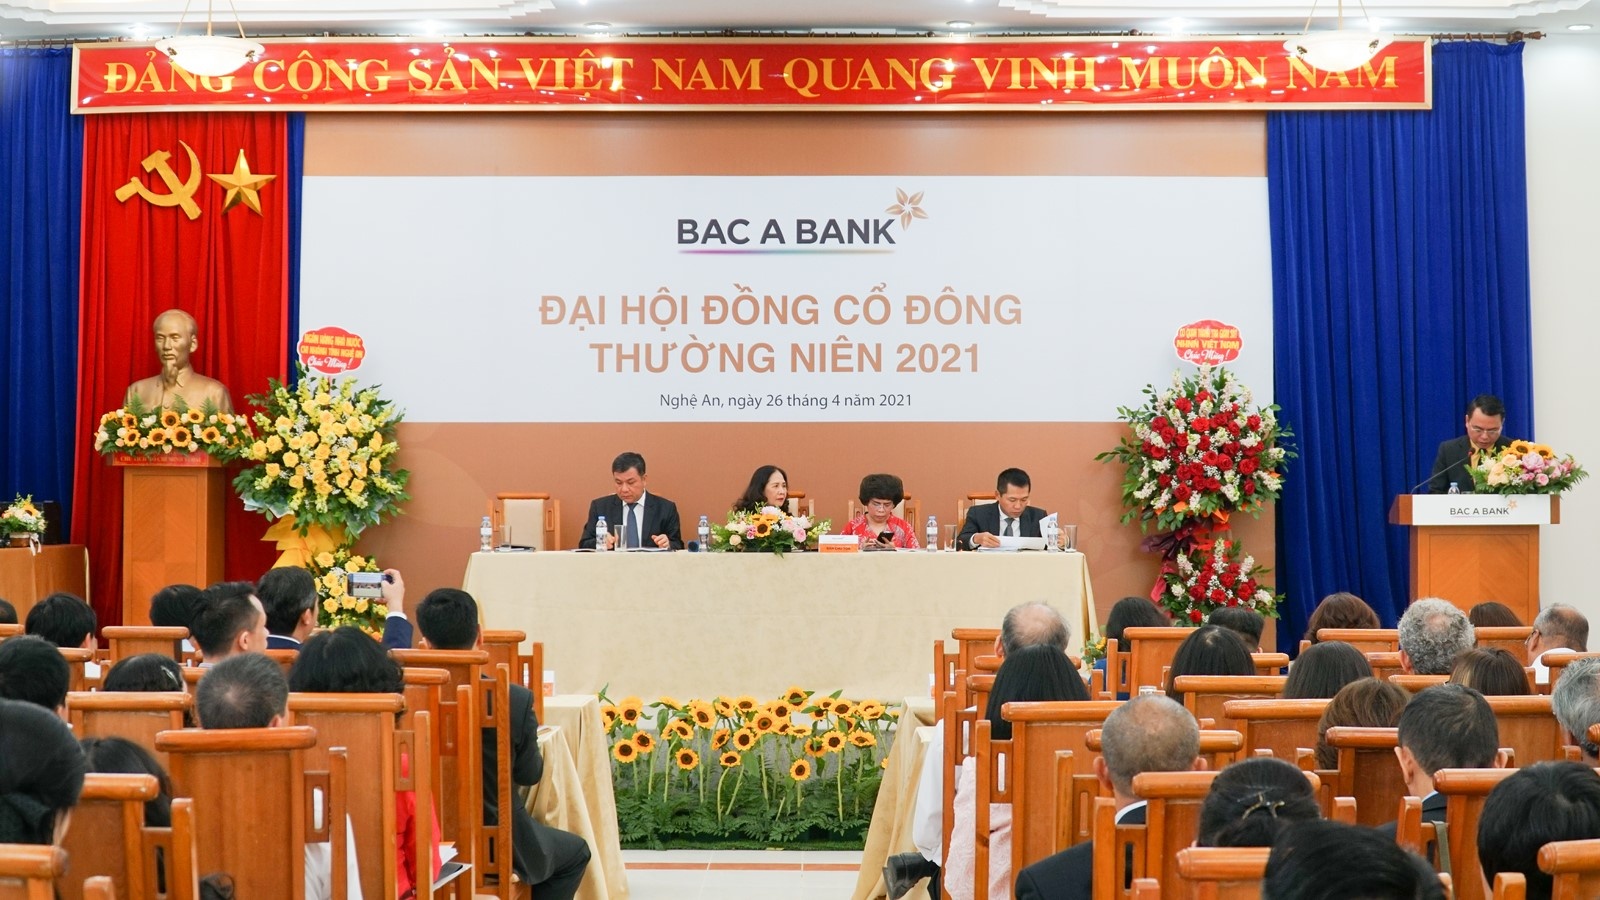 dai hoi dong co dong bac a bank thong qua phuong an tang von dieu le len 7531 ty dong